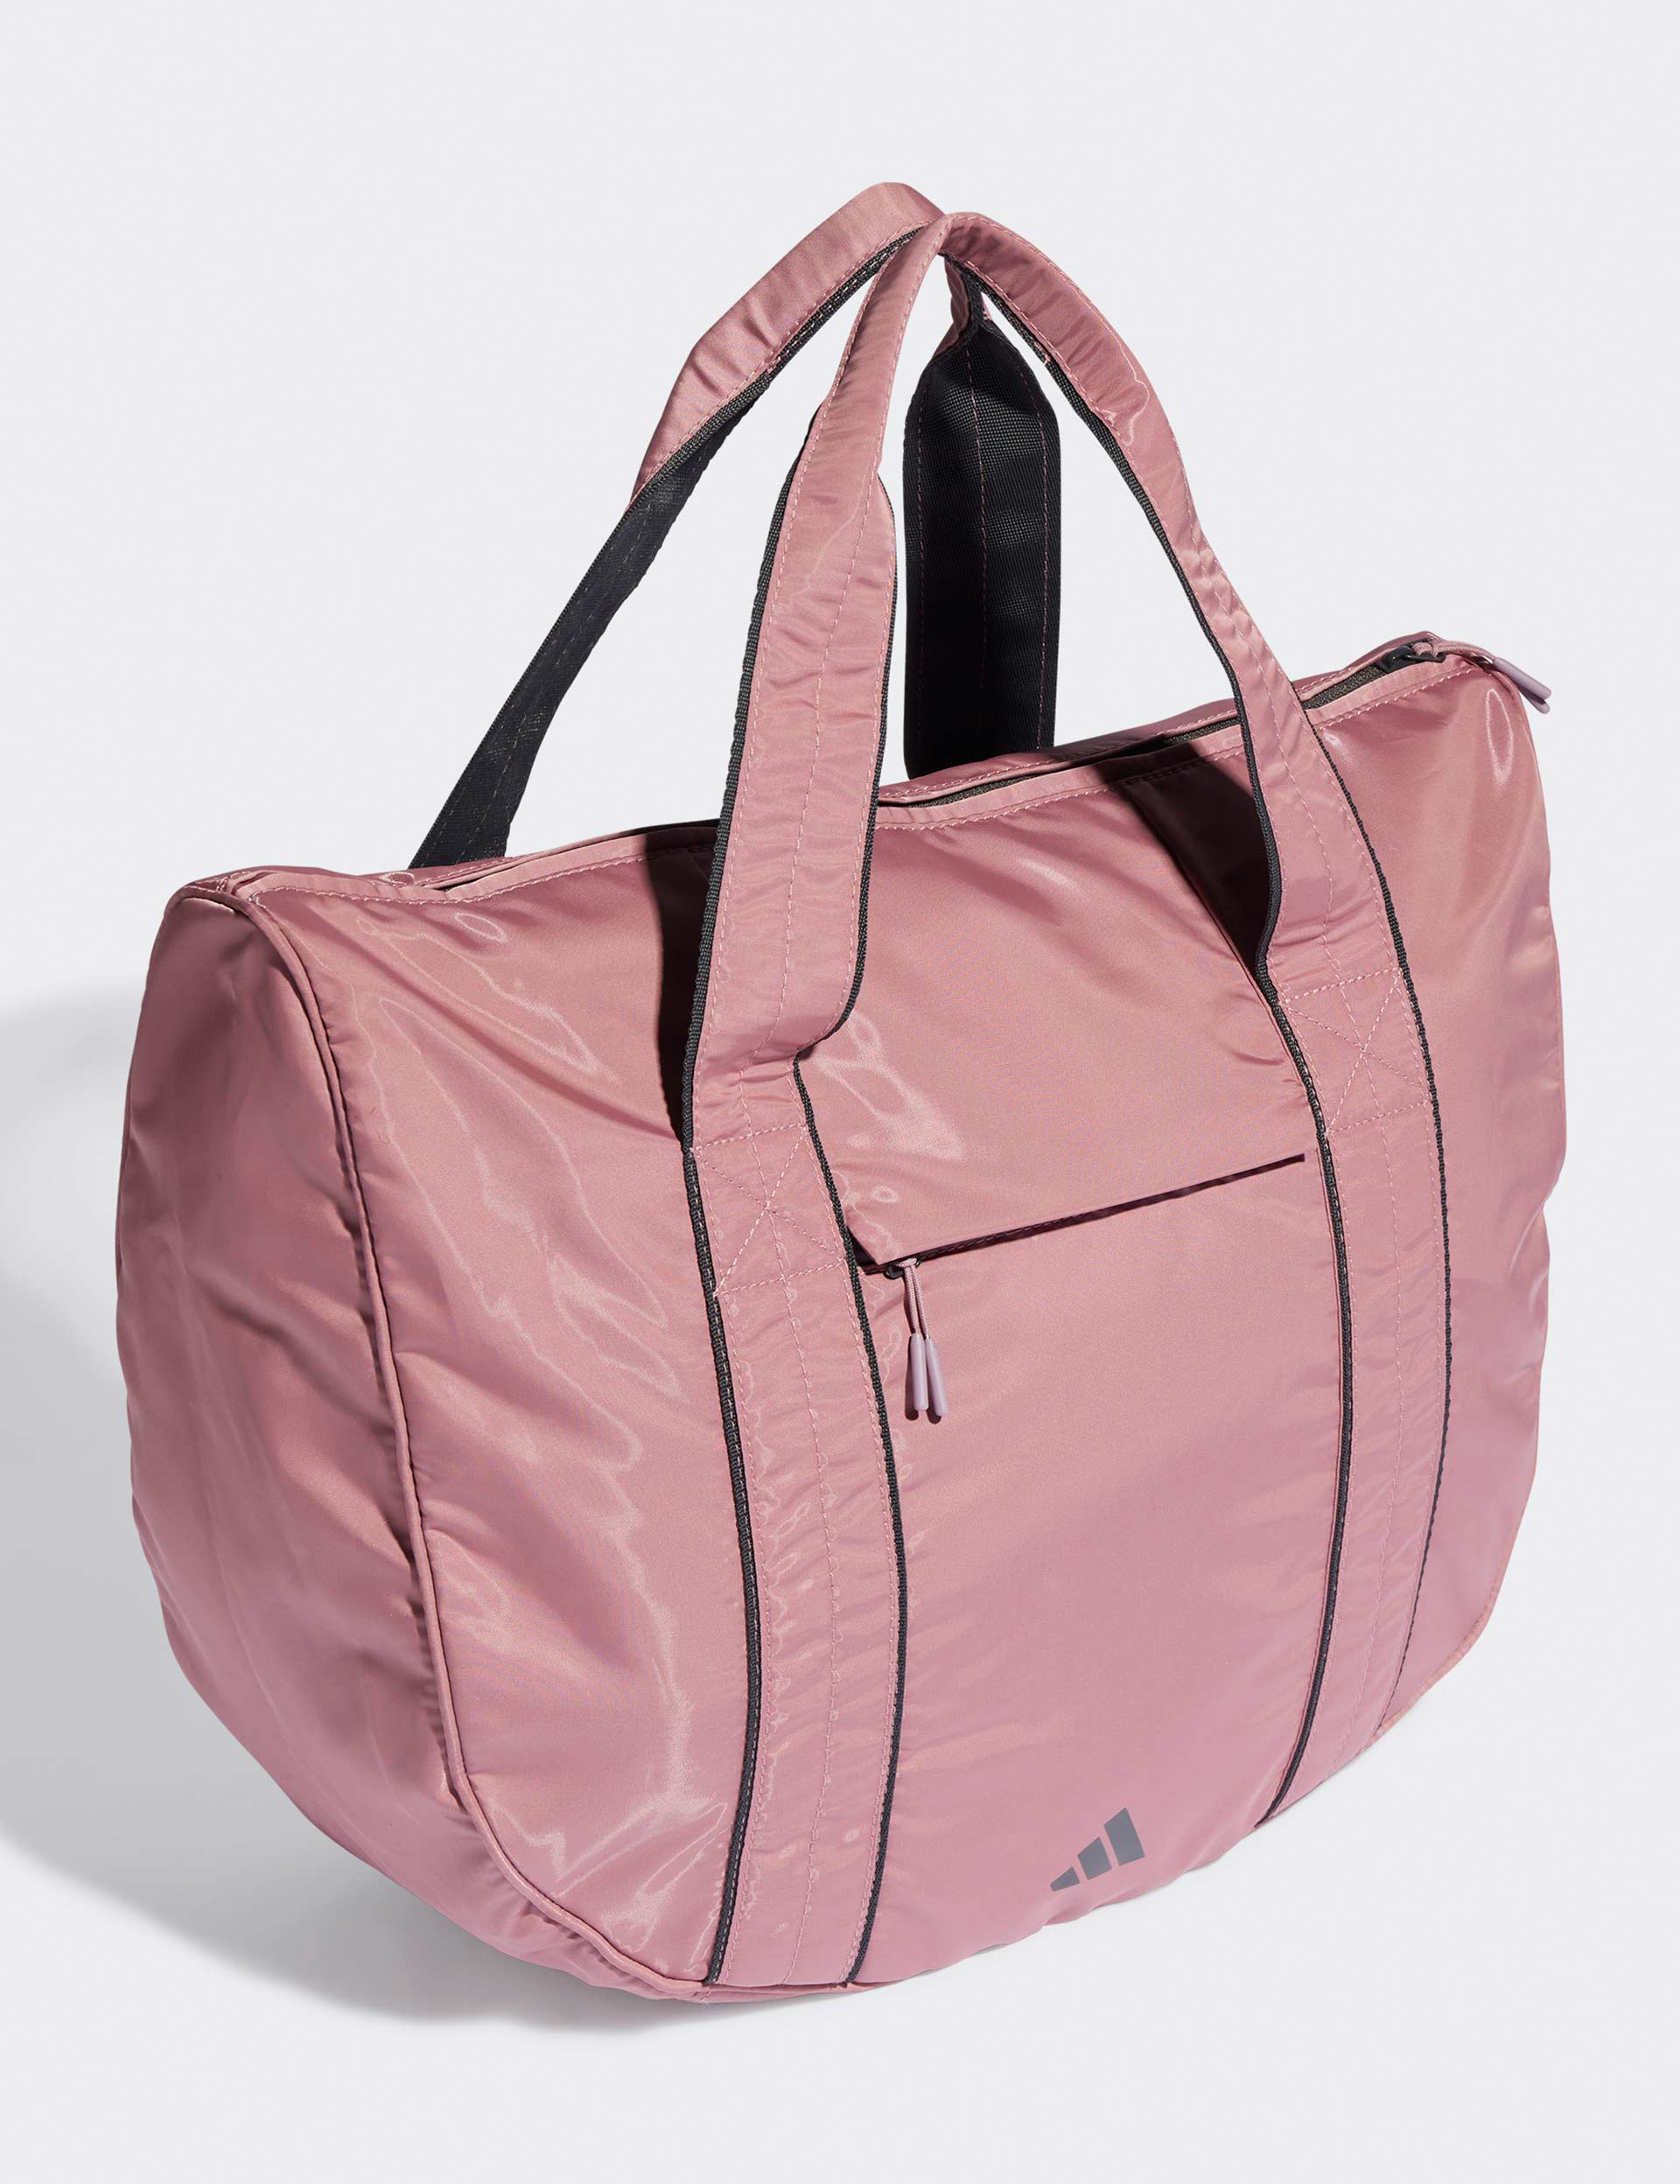 Sport Tote Bag, Adidas